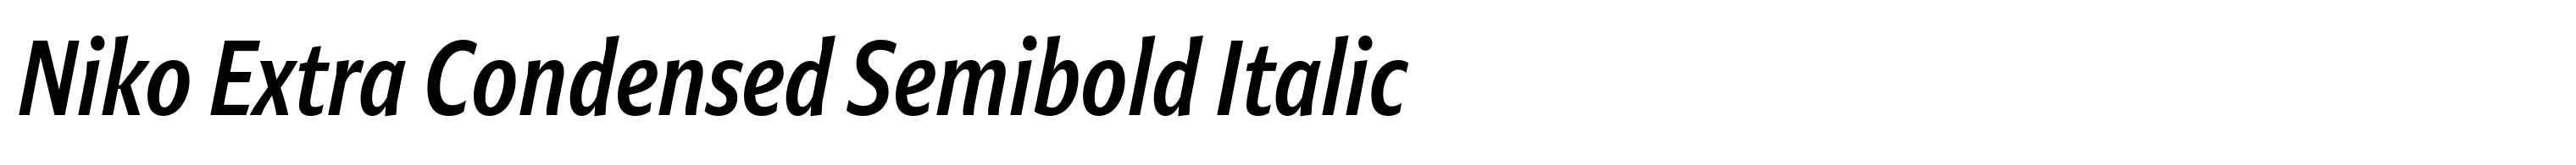 Niko Extra Condensed Semibold Italic